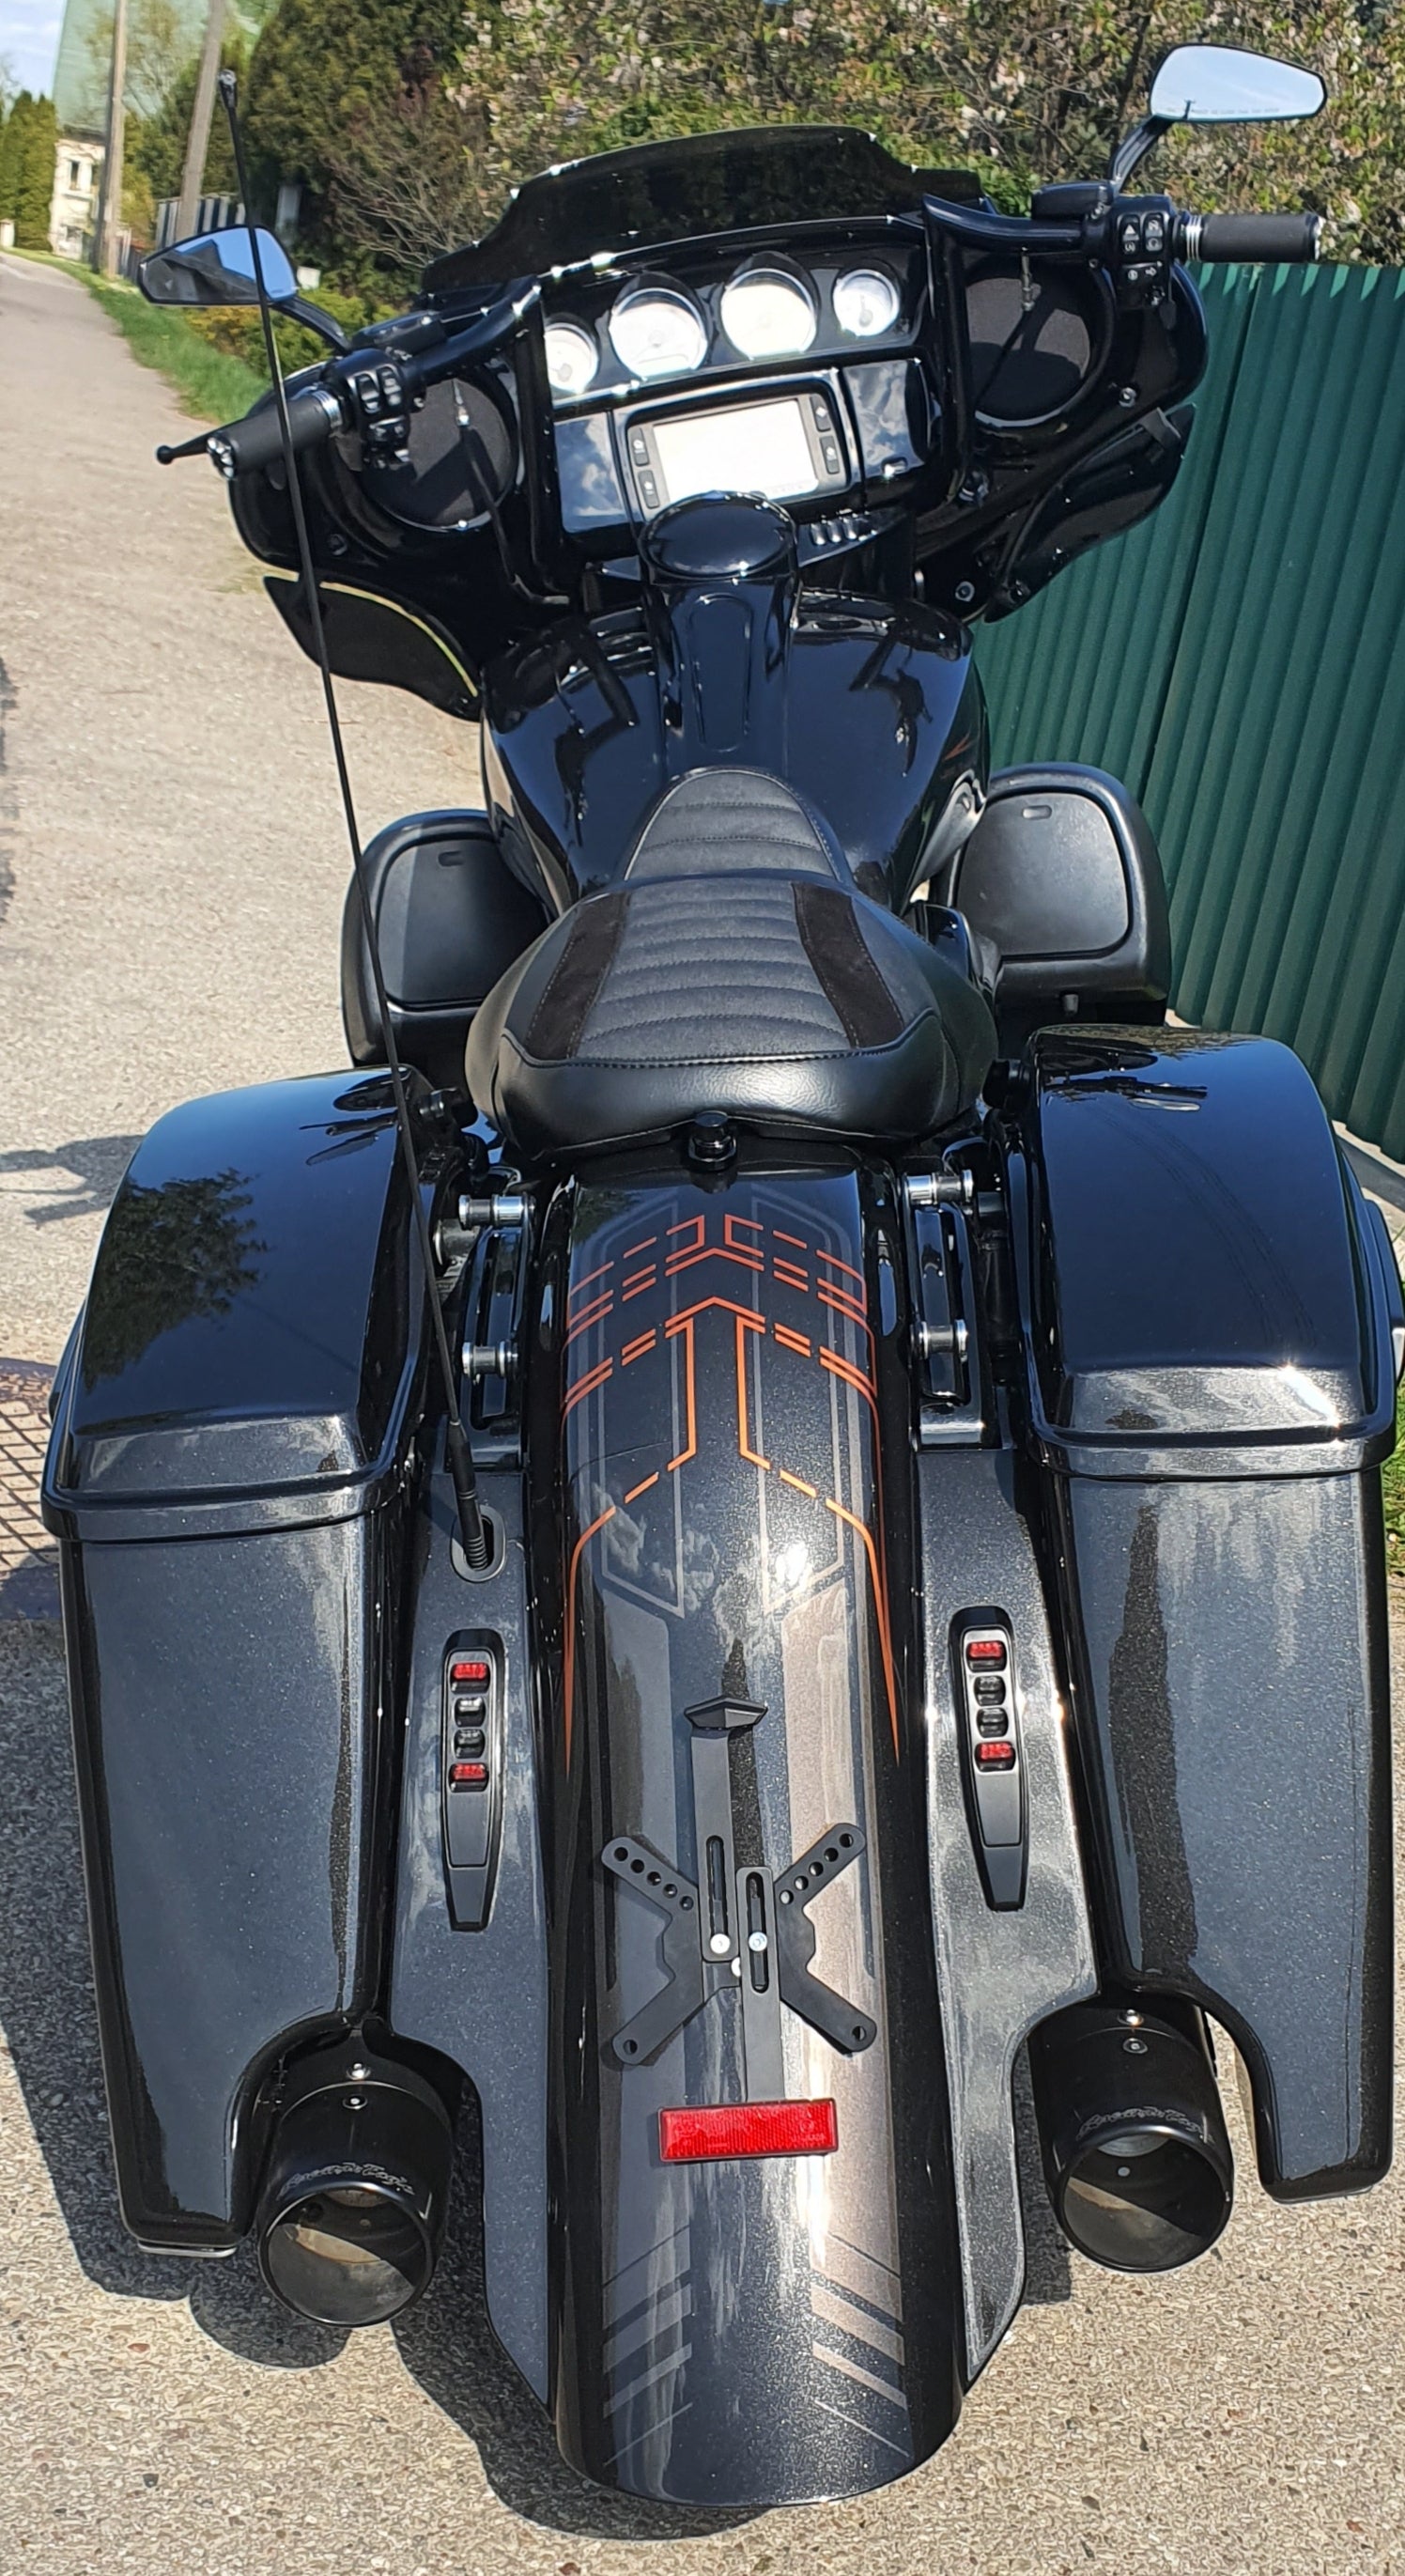 Set of bolt on type stretched fender and saddlebags for Harley Davidson Touring 2014 up models - Tommy&Sons